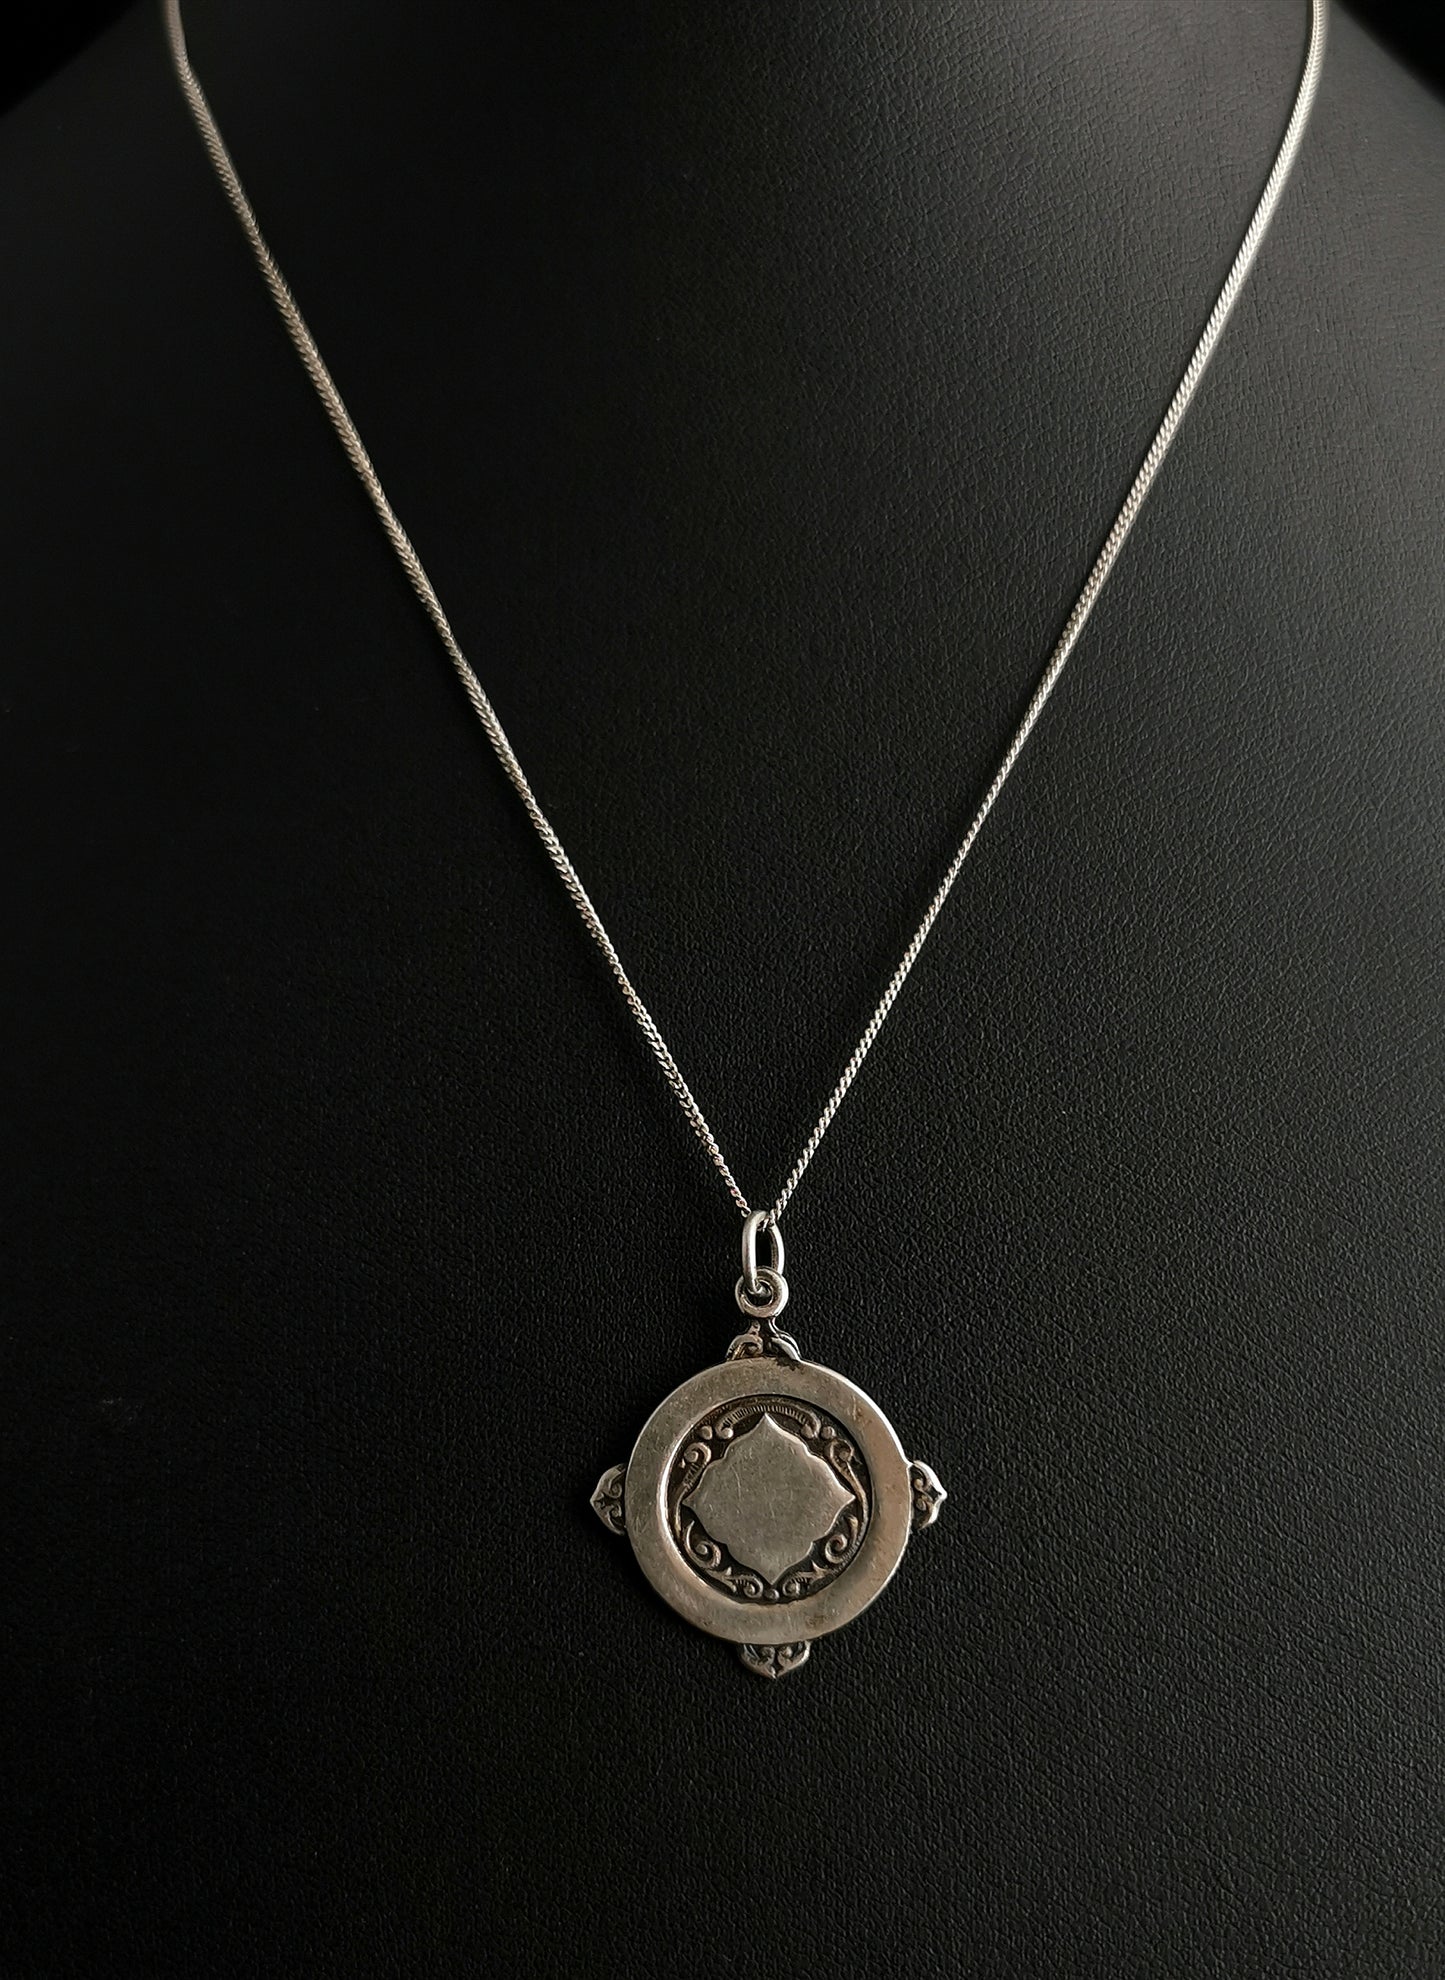 Vintage sterling silver fob pendant, necklace